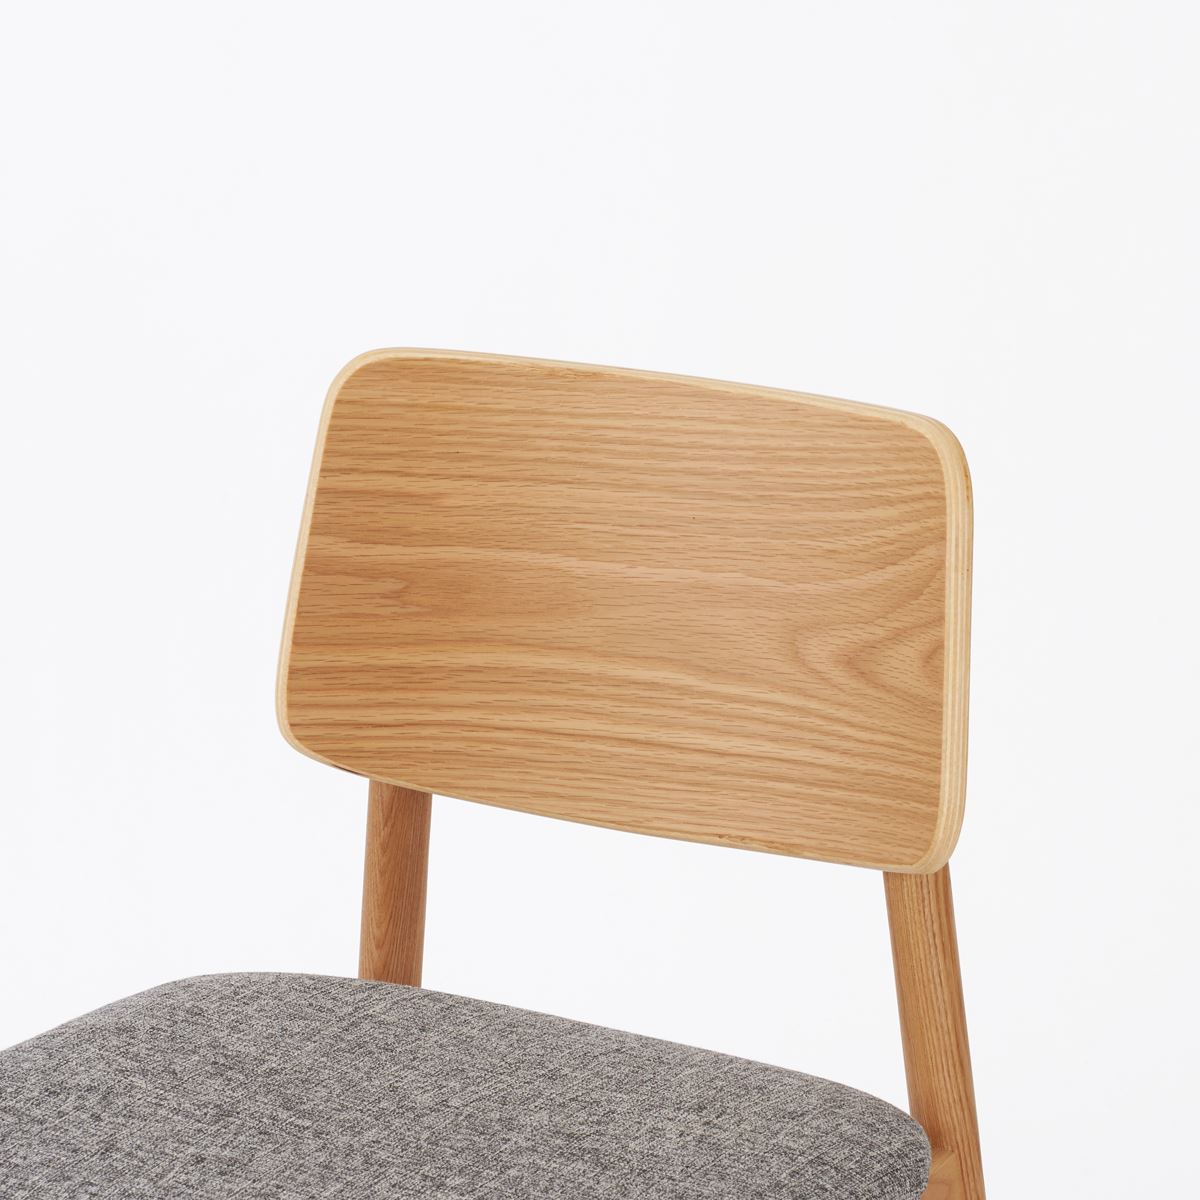 KUUM  Chair shikaku - Natural Wooden Frame/Cushion / クーム チェア シカク